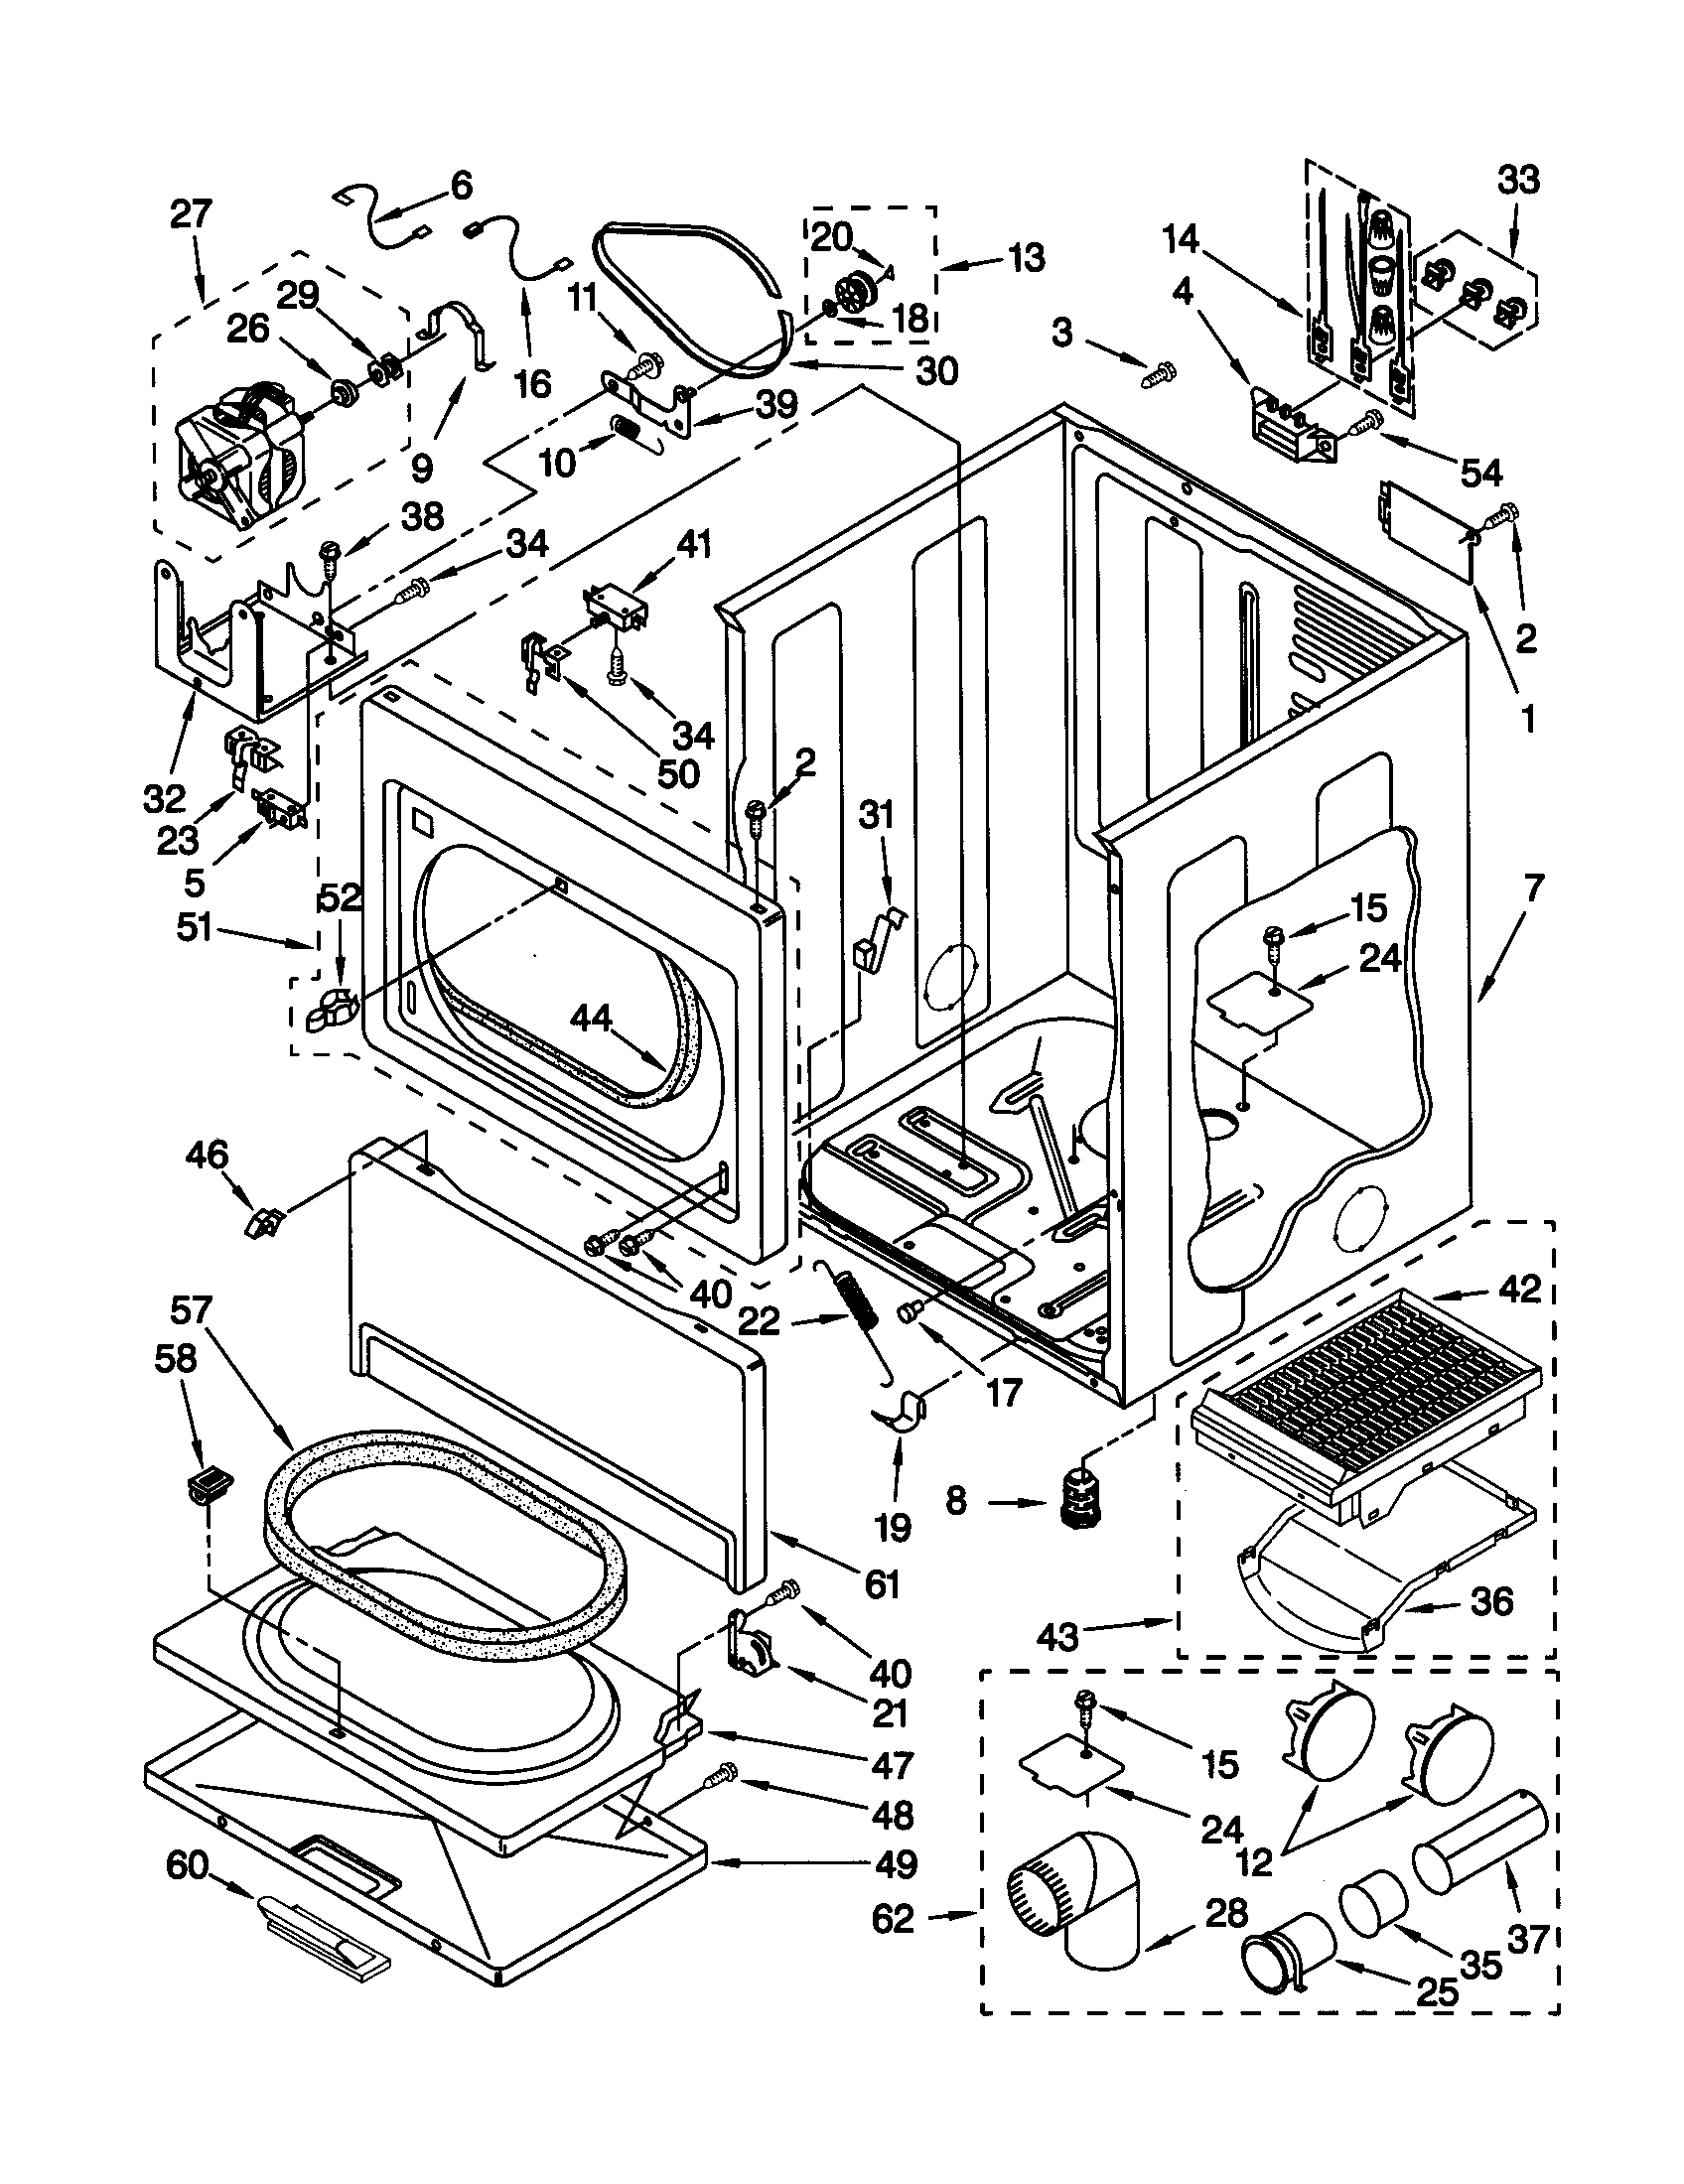 Kenmore Dryer Parts Sears Partsdirect